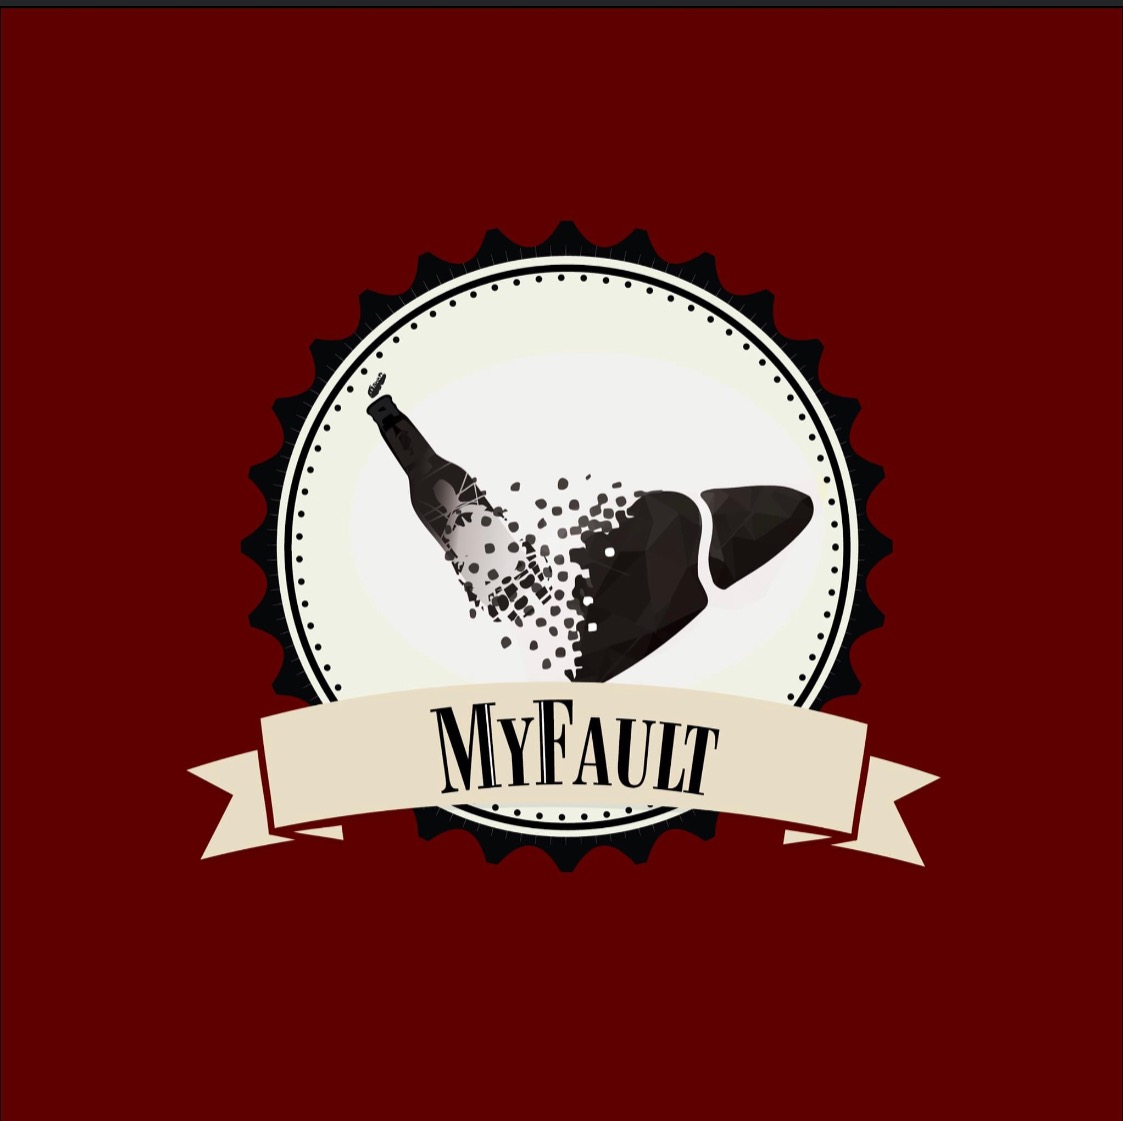 MyFault logo